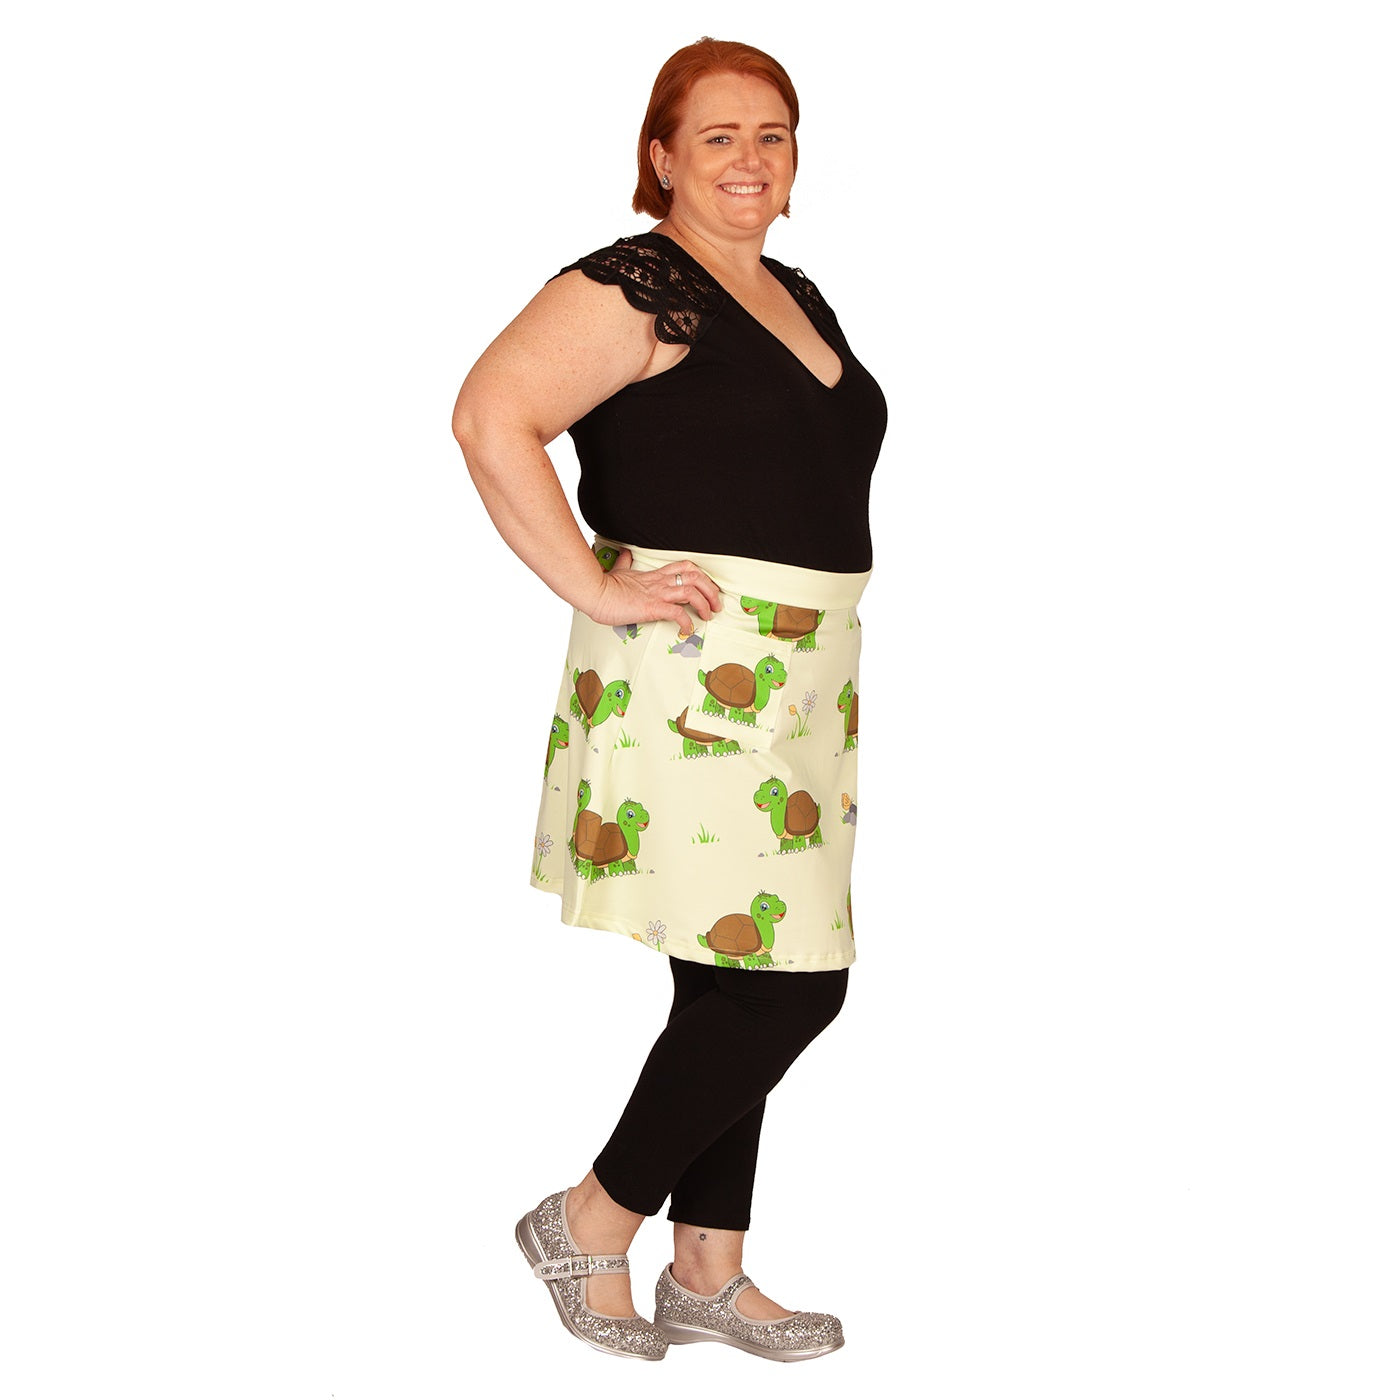 Wisdom Short Skirt by RainbowsAndFairies.com.au (Tortoise - Turle - Skirt With Pockets - Aline Skirt - Vintage Inspired - Kitsch - Animal Print) - SKU: CL_SHORT_WISDO_ORG - Pic-06